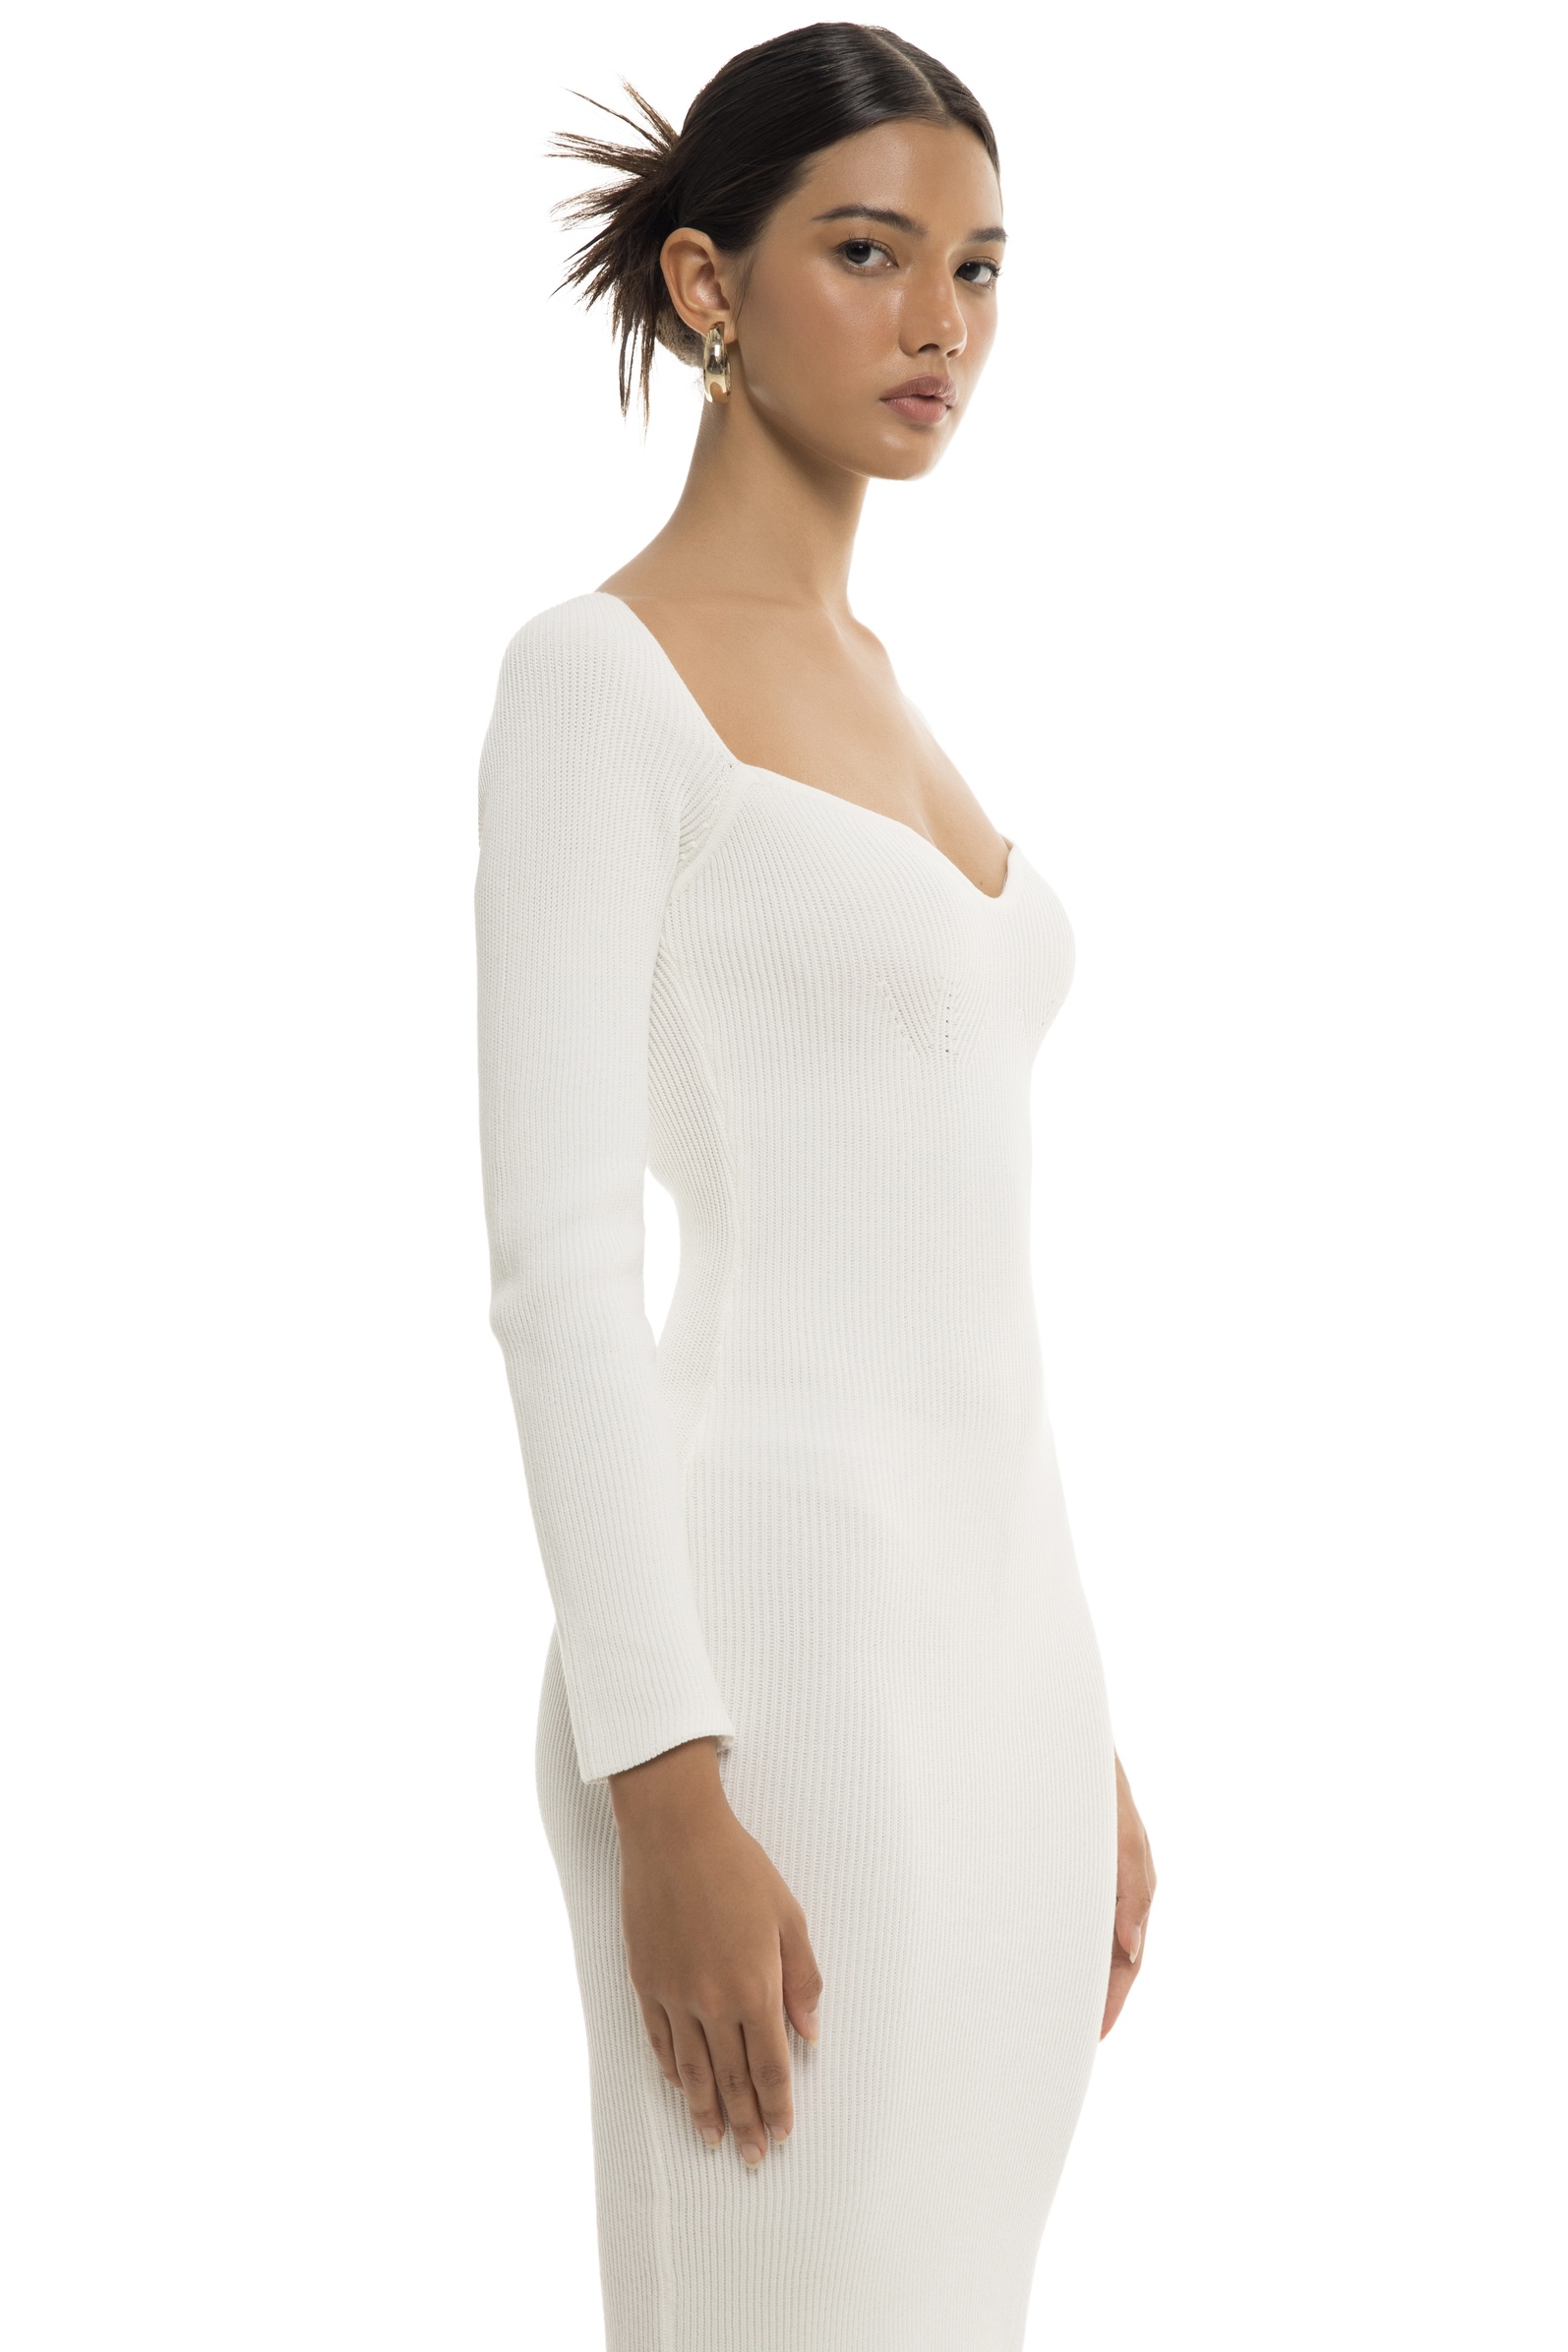 SERIRA KNIT DRESS - WHITE